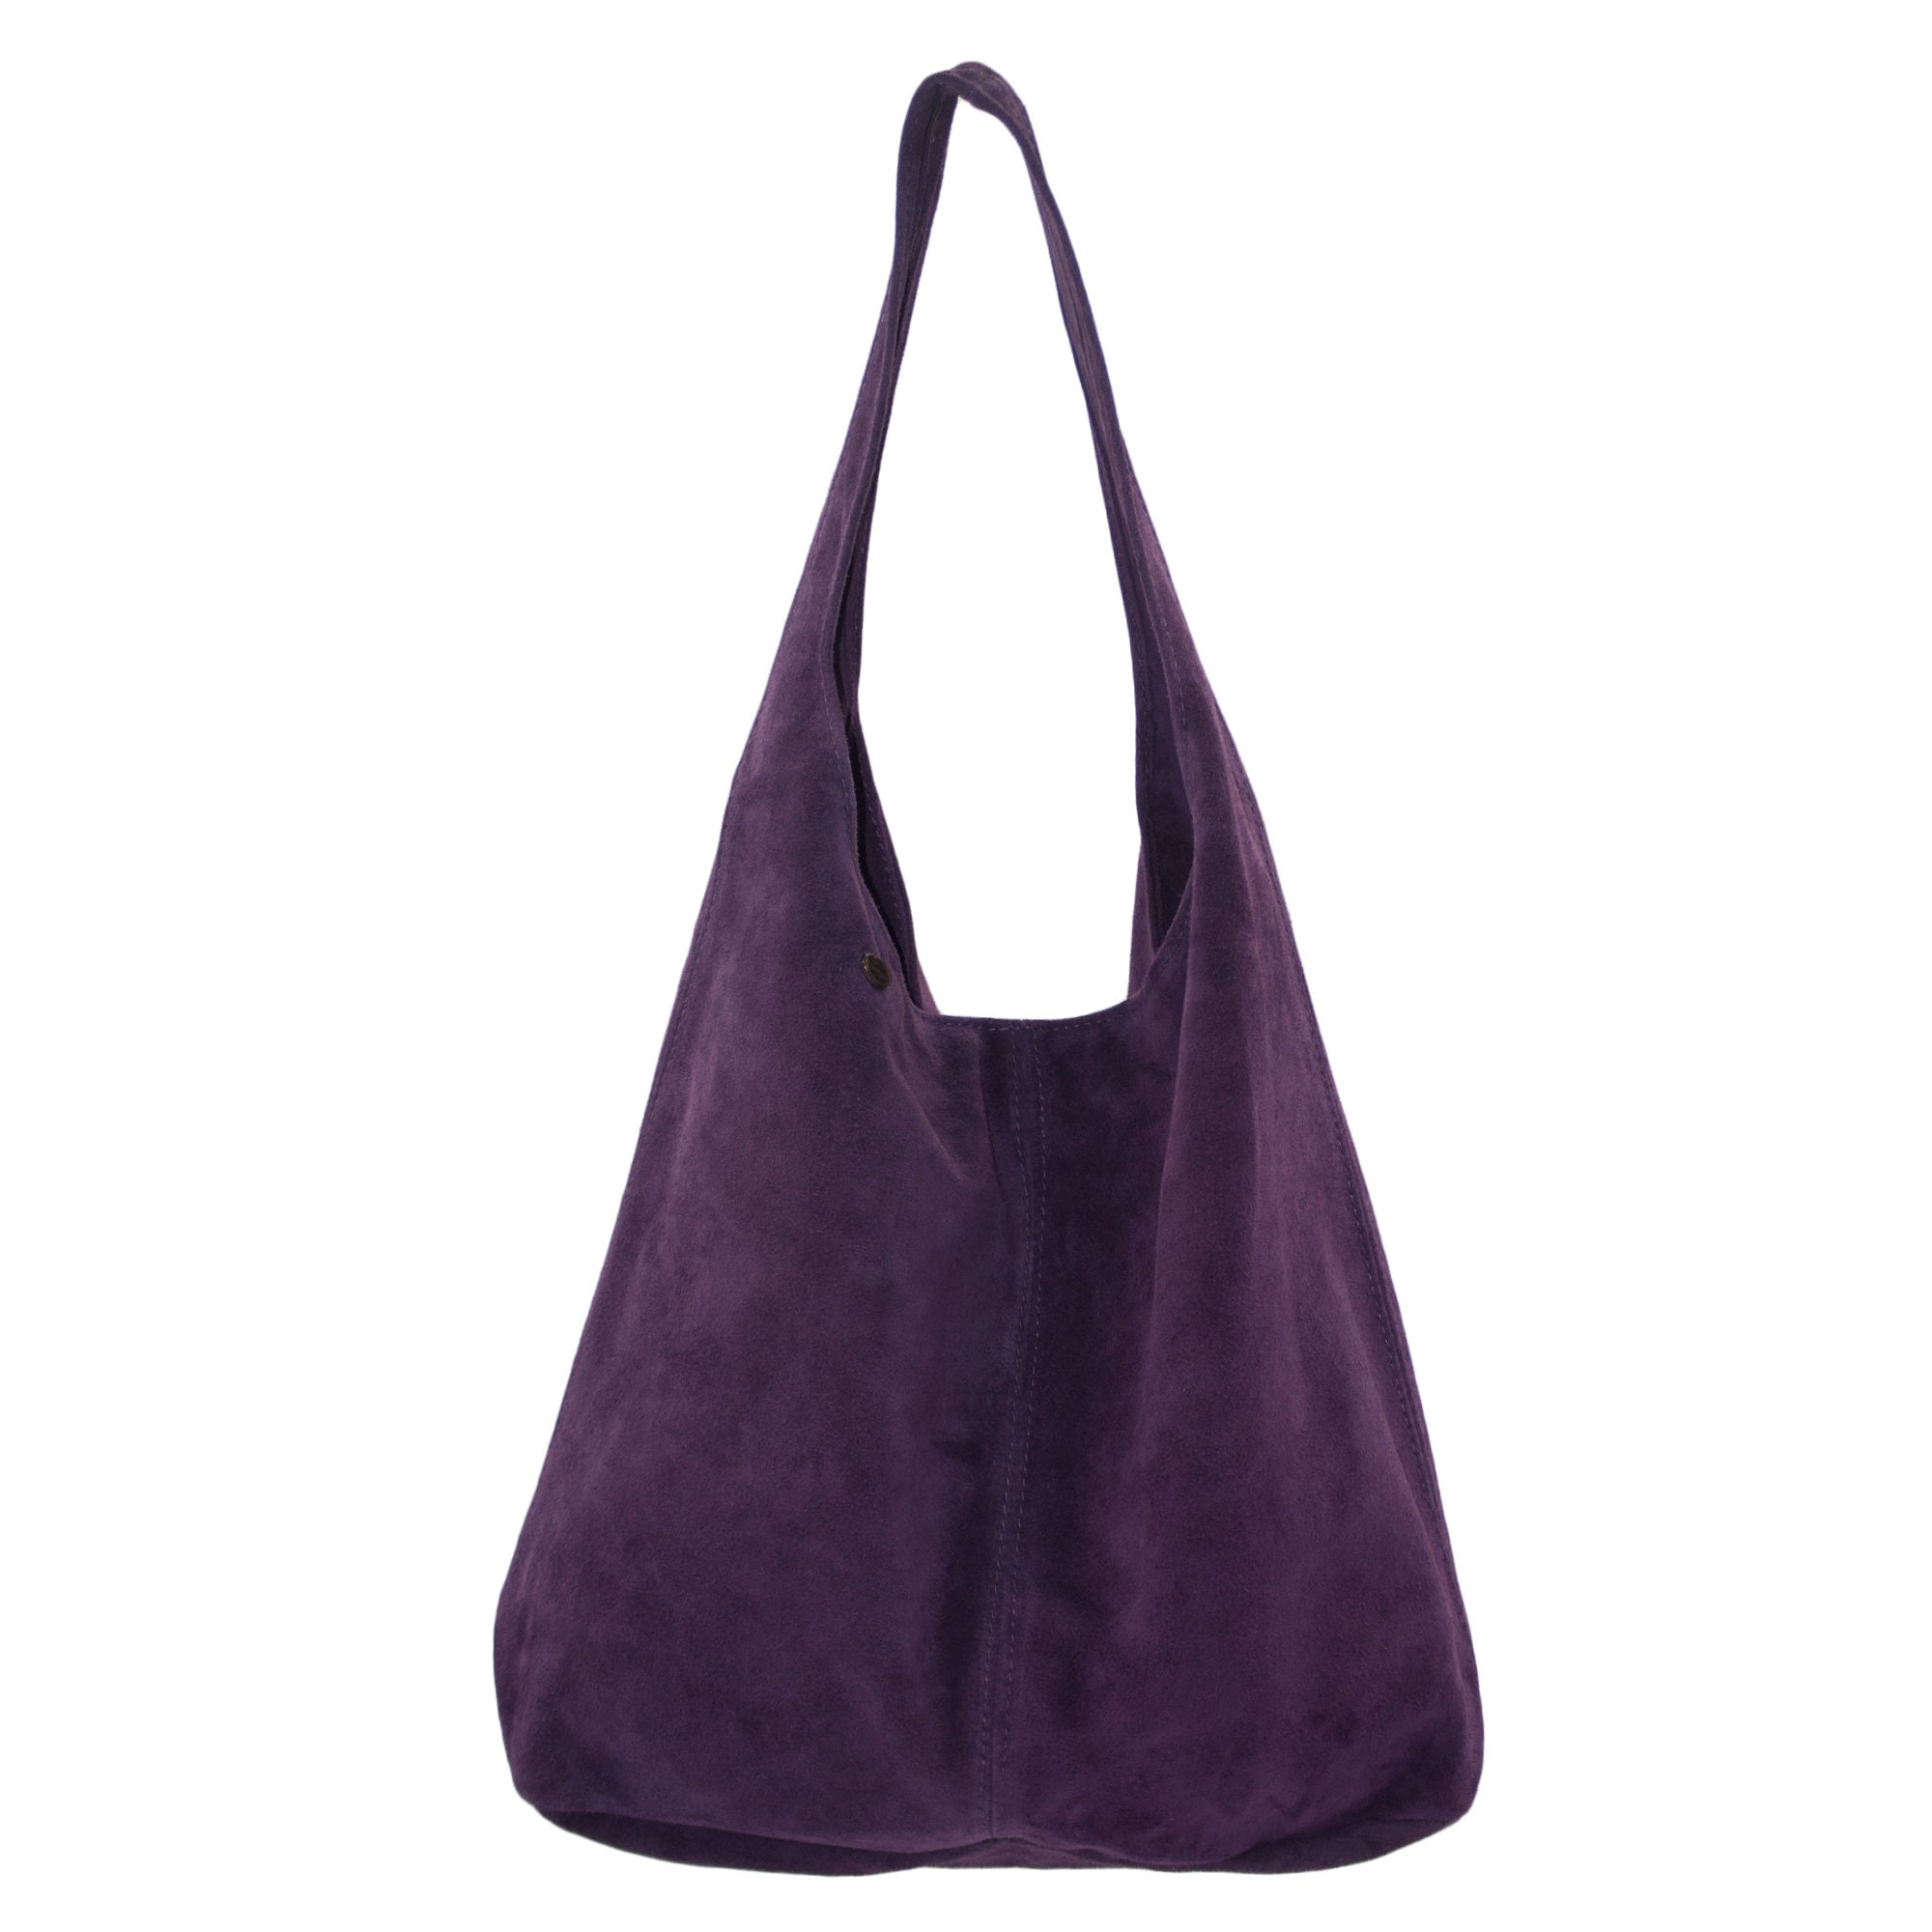 ZIPPER CLOSURE on TOP Leather Bag Handbag Shopper Suede - Etsy UK